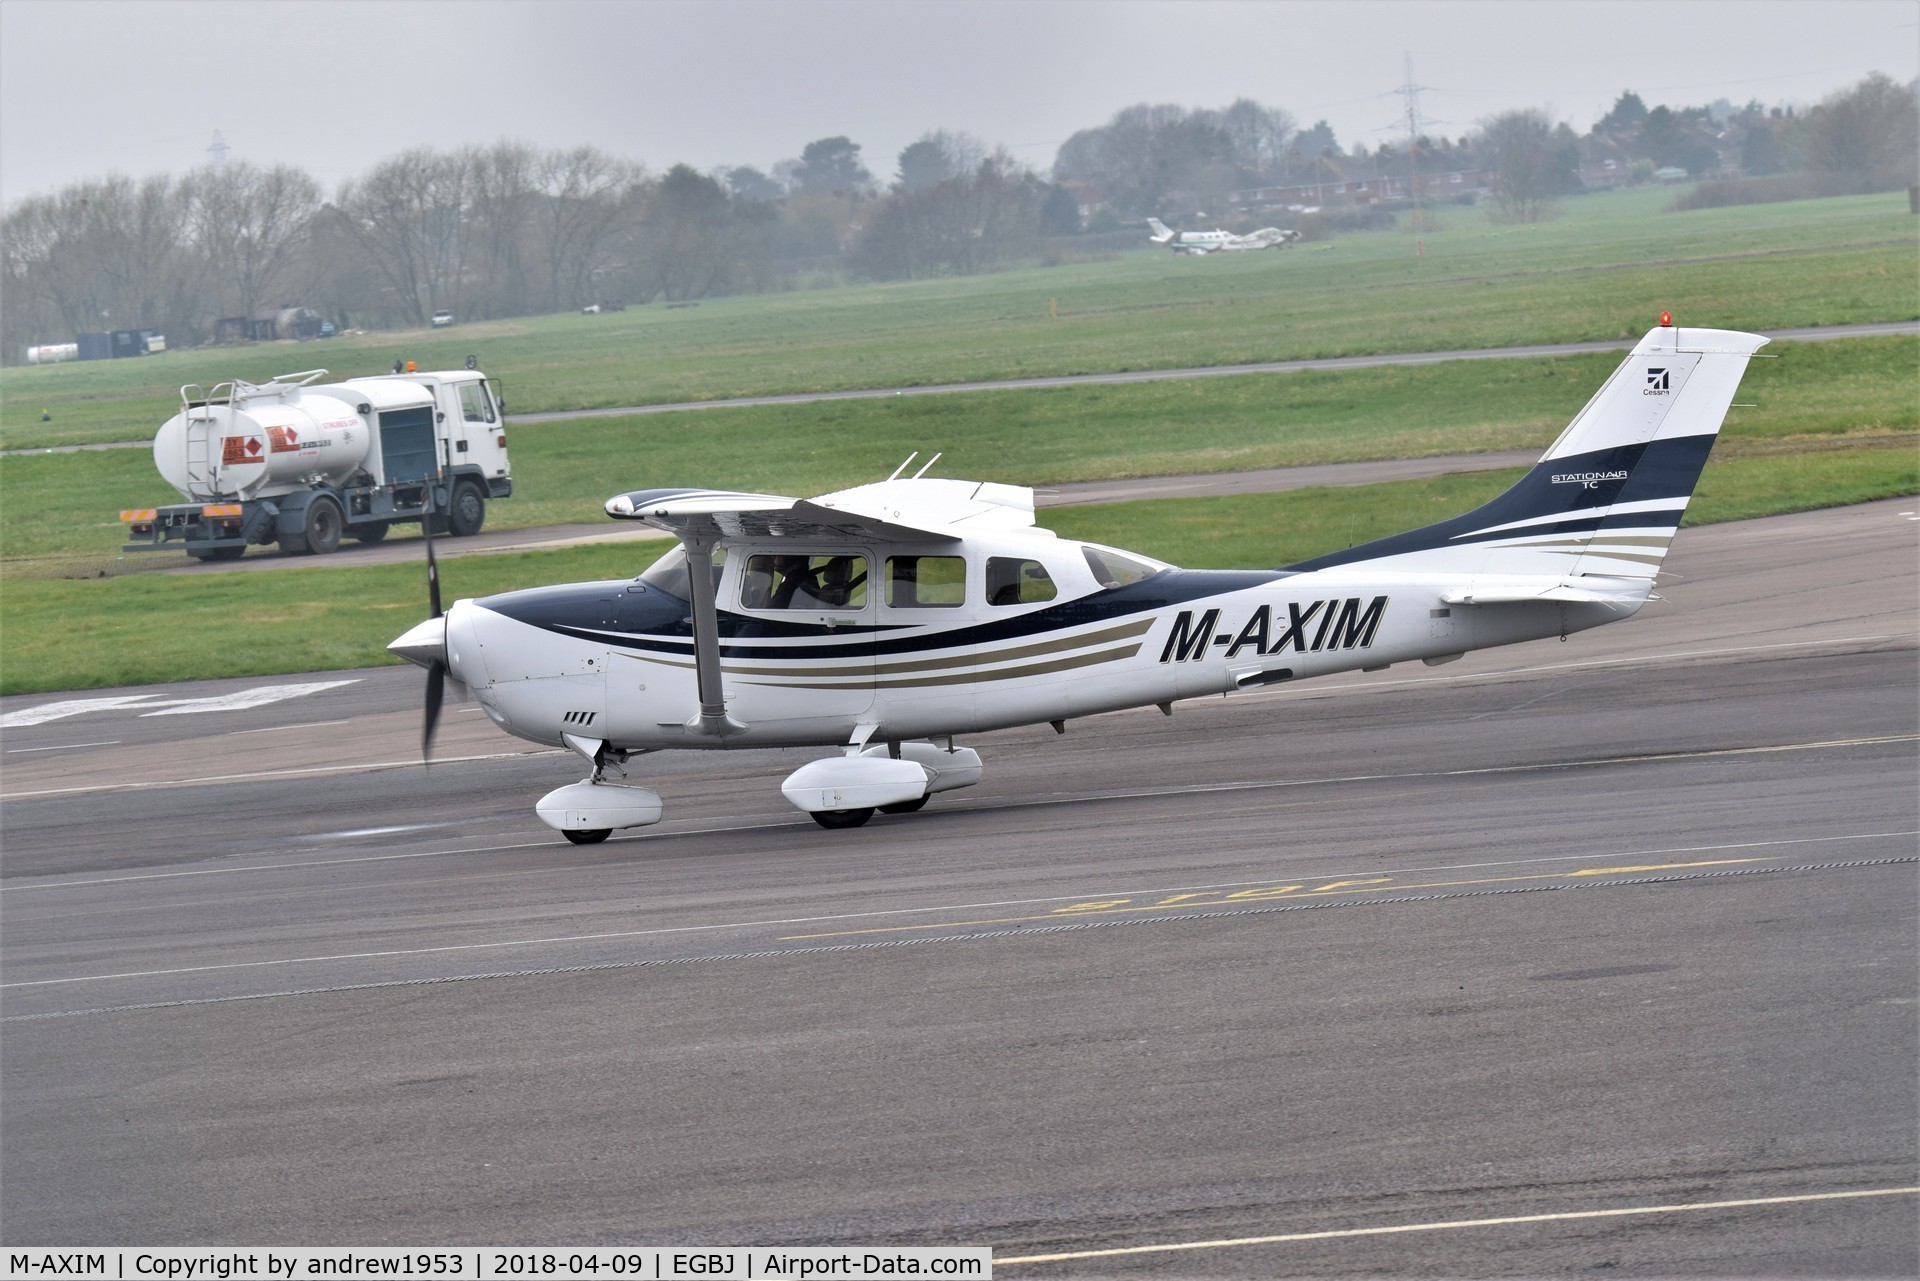 M-AXIM, 2005 Cessna T206H Turbo Stationair C/N T20608513, M-AXIM at Gloucestershire Airport.